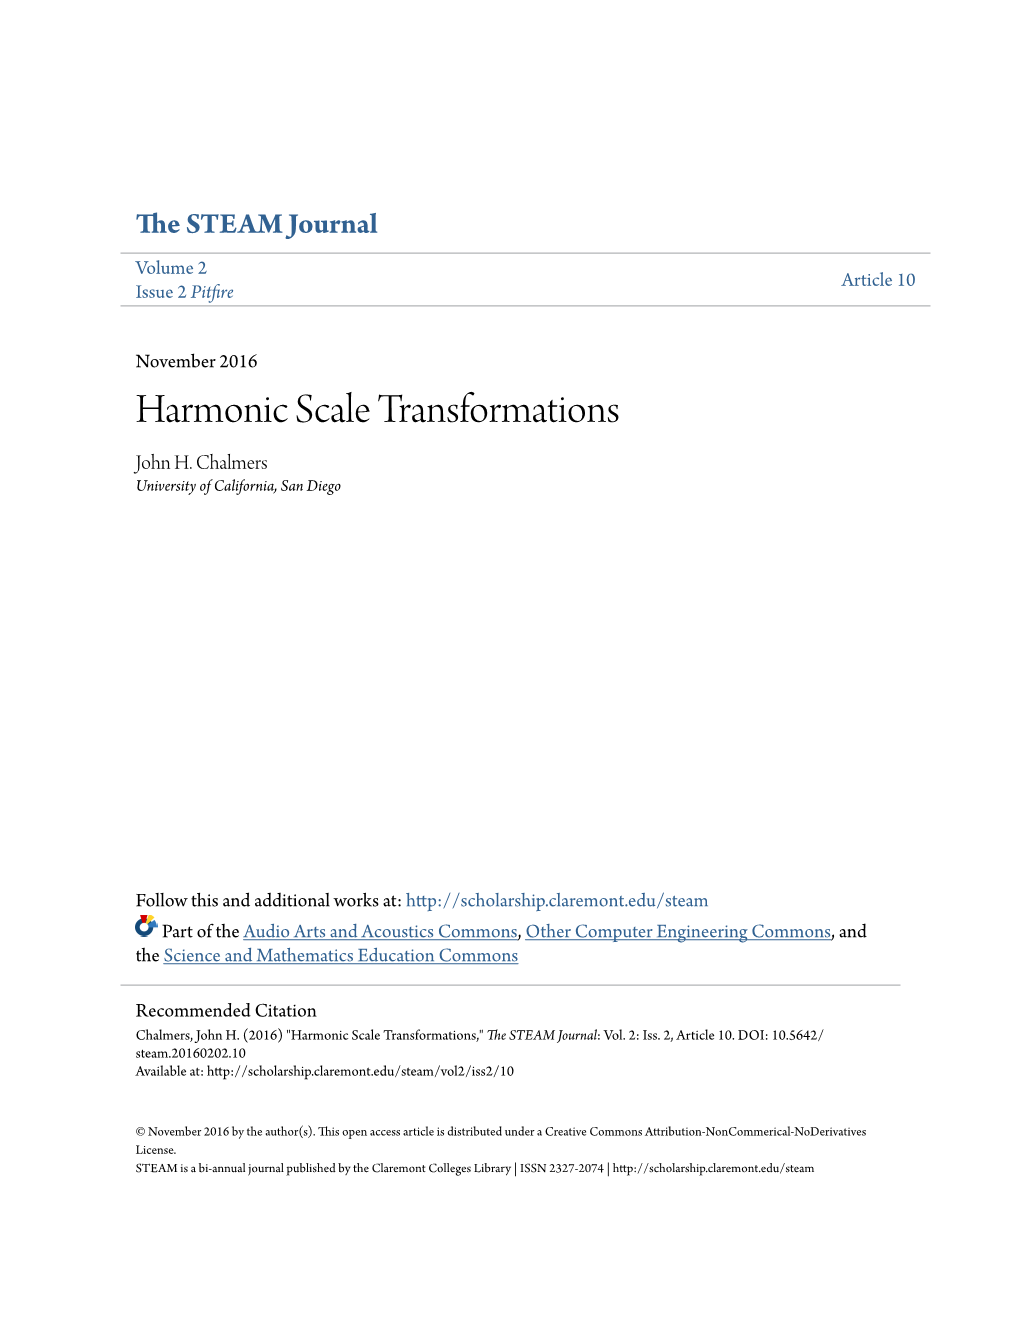 Harmonic Scale Transformations John H